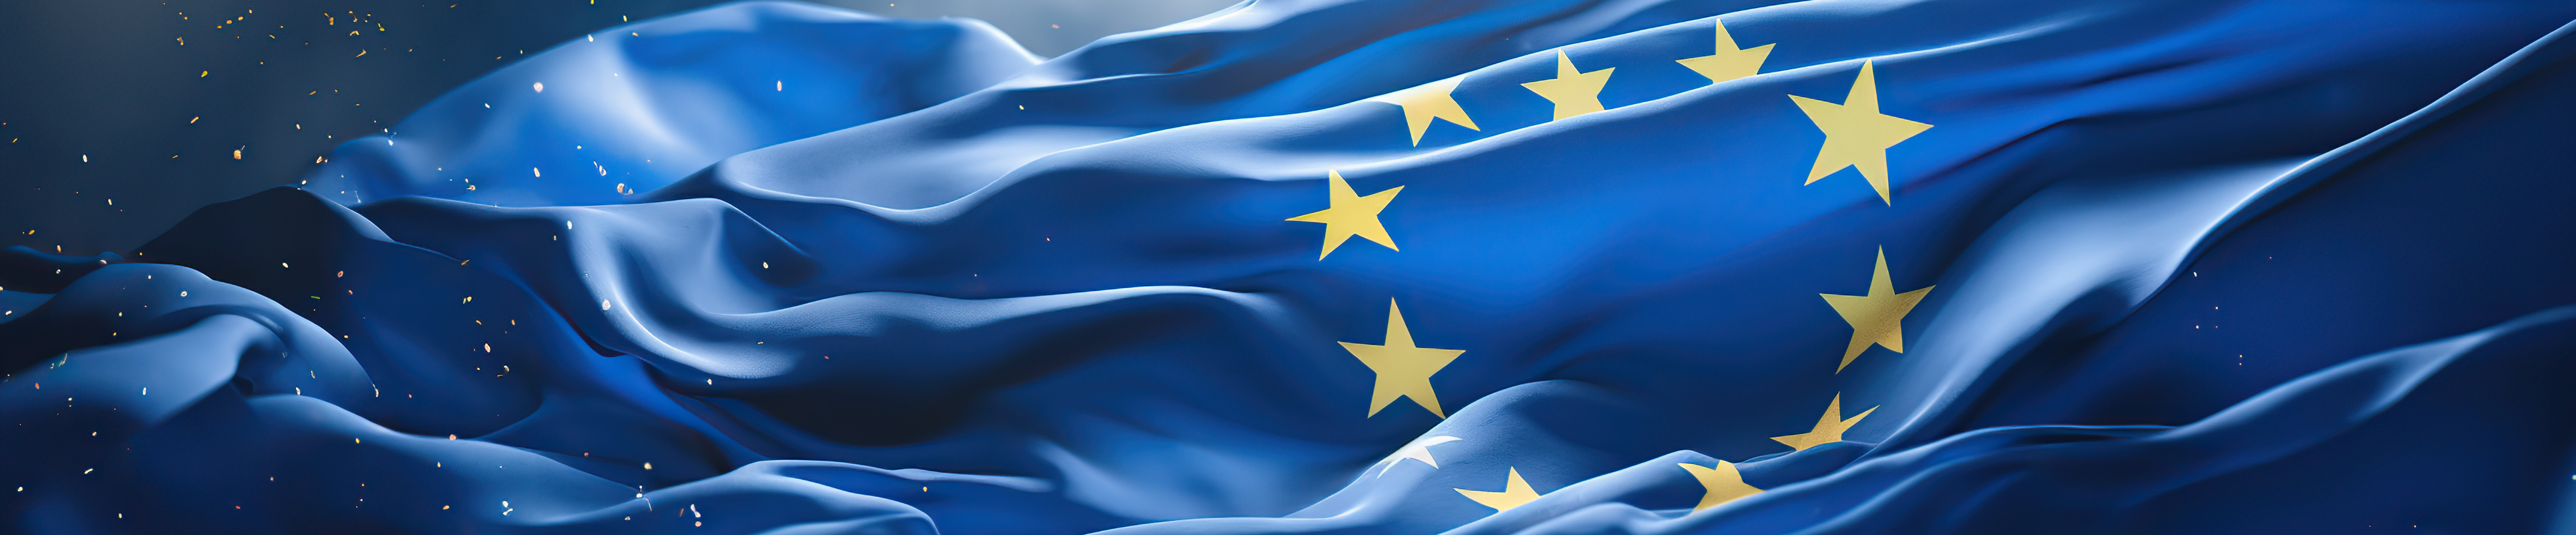 European flag banner